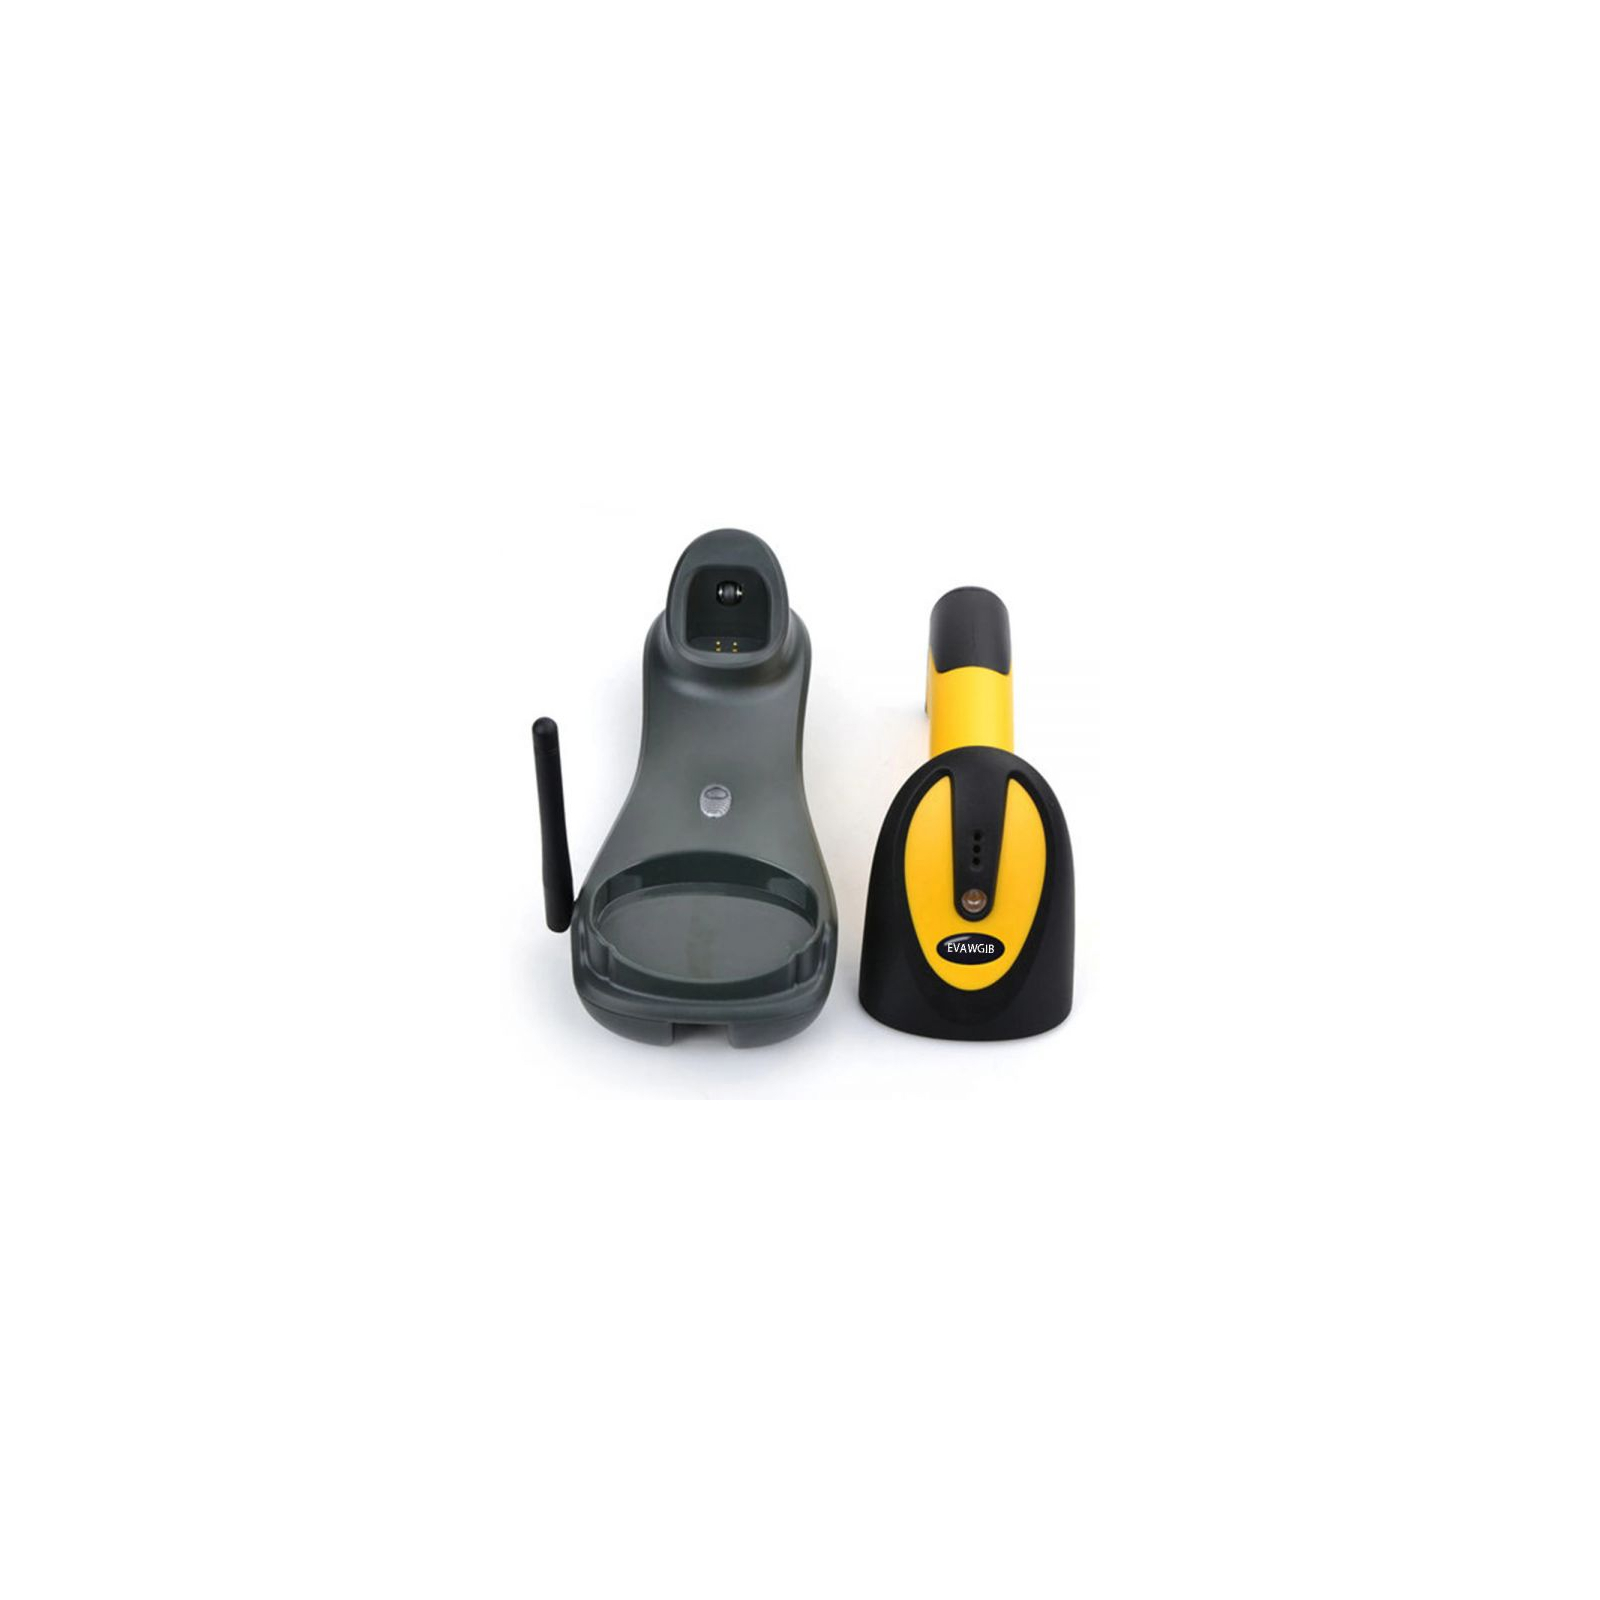 Сканер штрих-кода UKRMARK EV-W2503 2D, 433MHz, USB, IP64, stand, black/yellow (00769) изображение 3